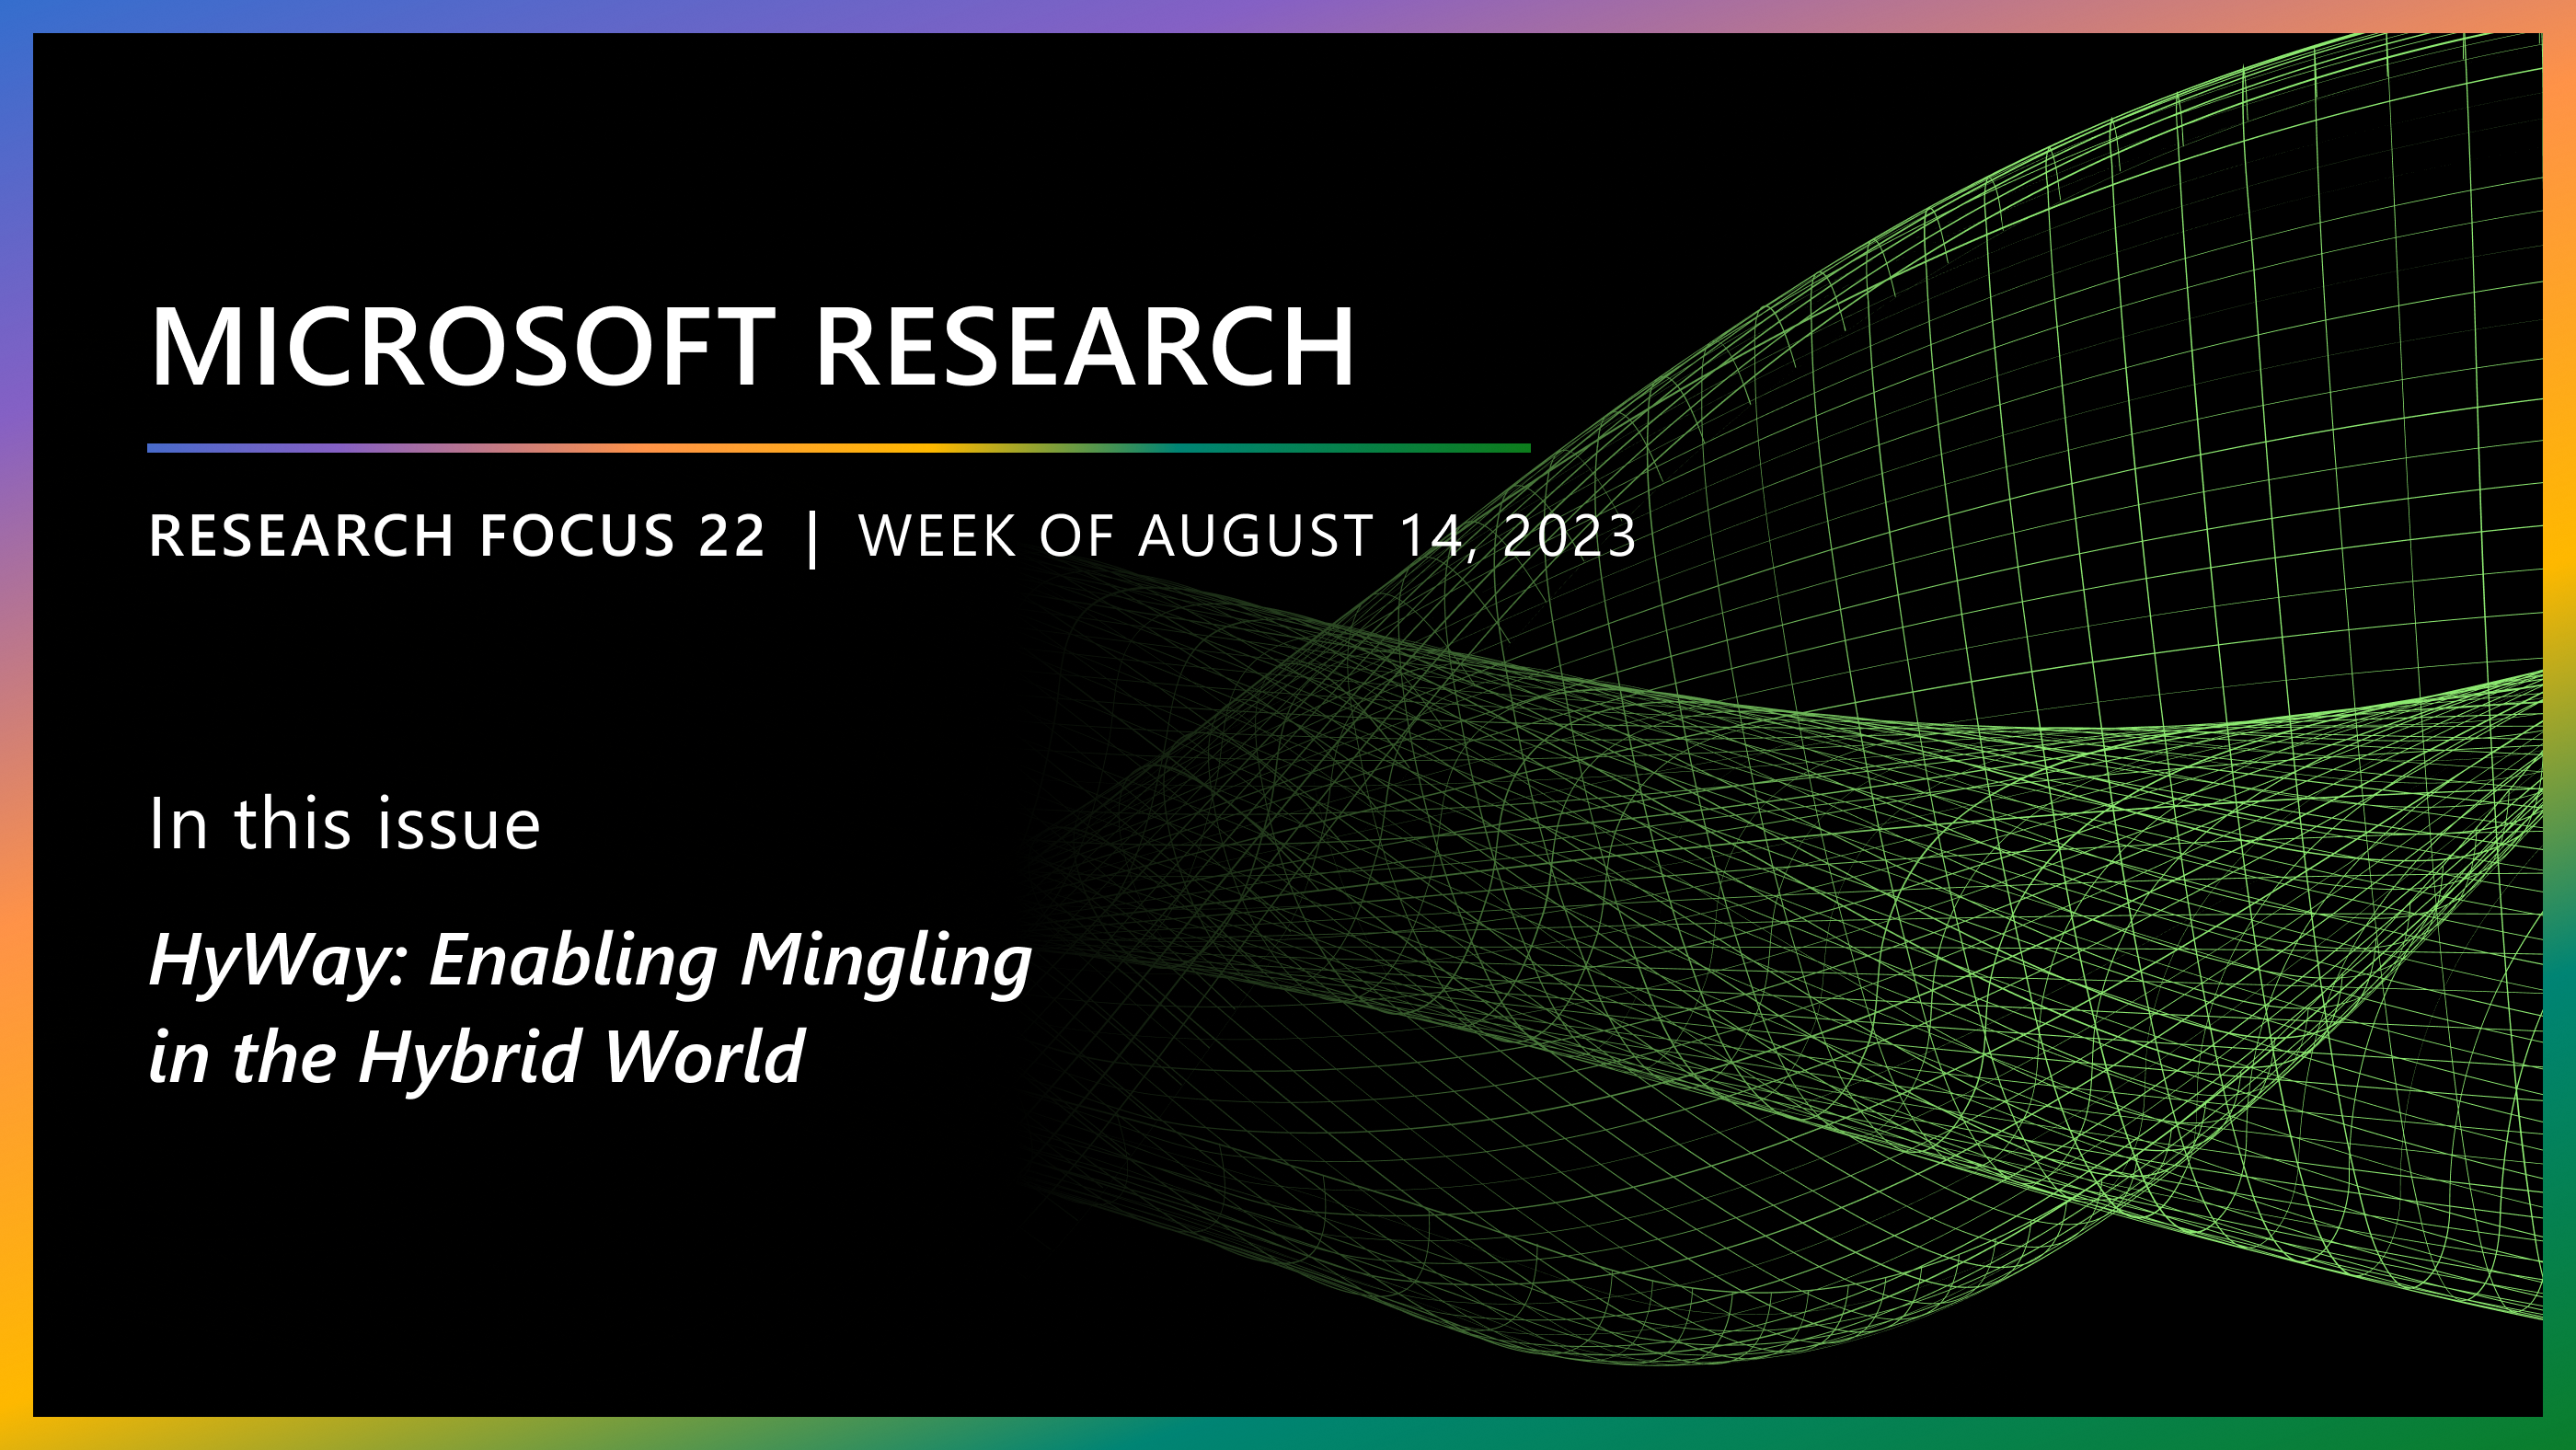 Microsoft Research Focus 22 | Week of August 14, 2023